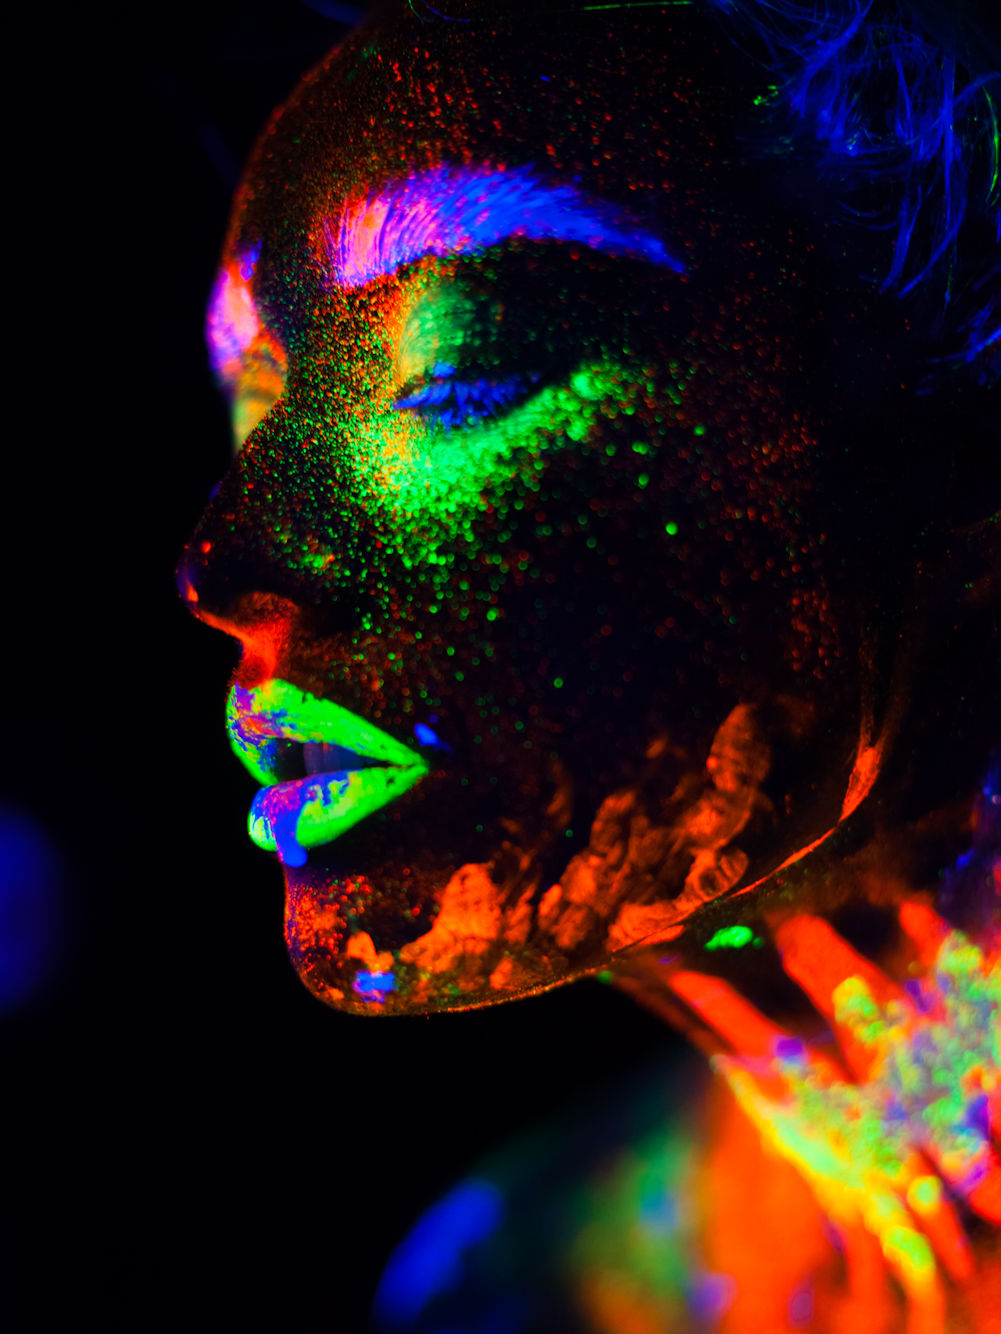 Kryvaline Neon Fluorescent Face and Body Paint 30g Dark Purple - Kryvaline Body Art Makeup | Glitter Tattoos, Face & Body Paint, Design - Kryvaline Body Art Makeup